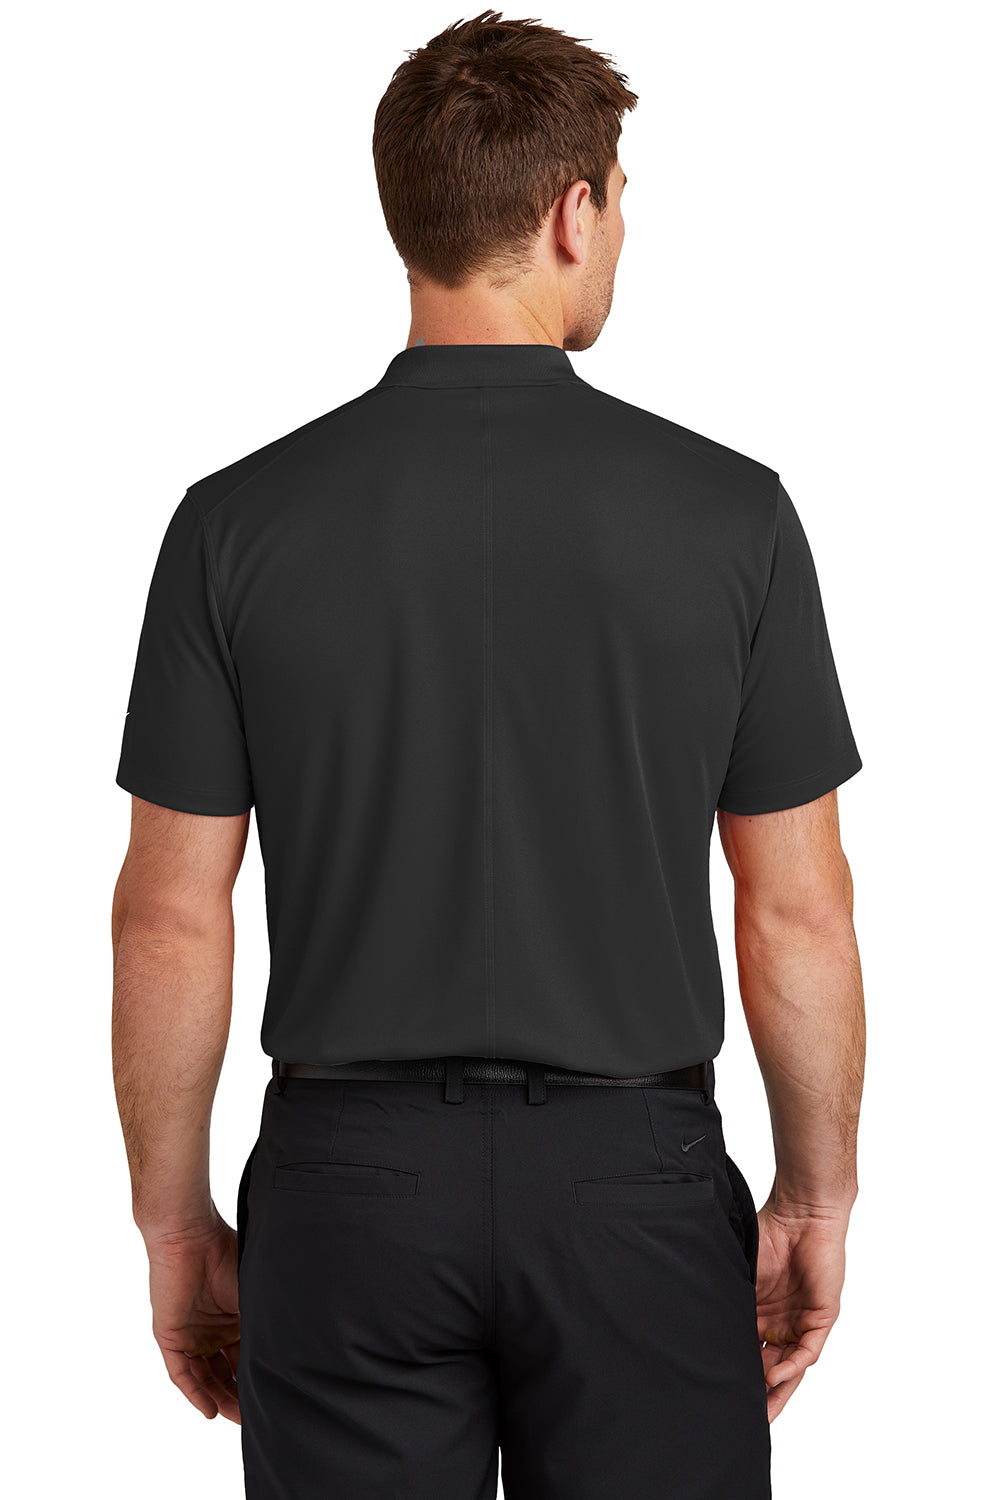 Nike NKDX6684 Mens Victory Dri-Fit Moisture Wicking Short Sleeve Polo Shirt Black Model Back